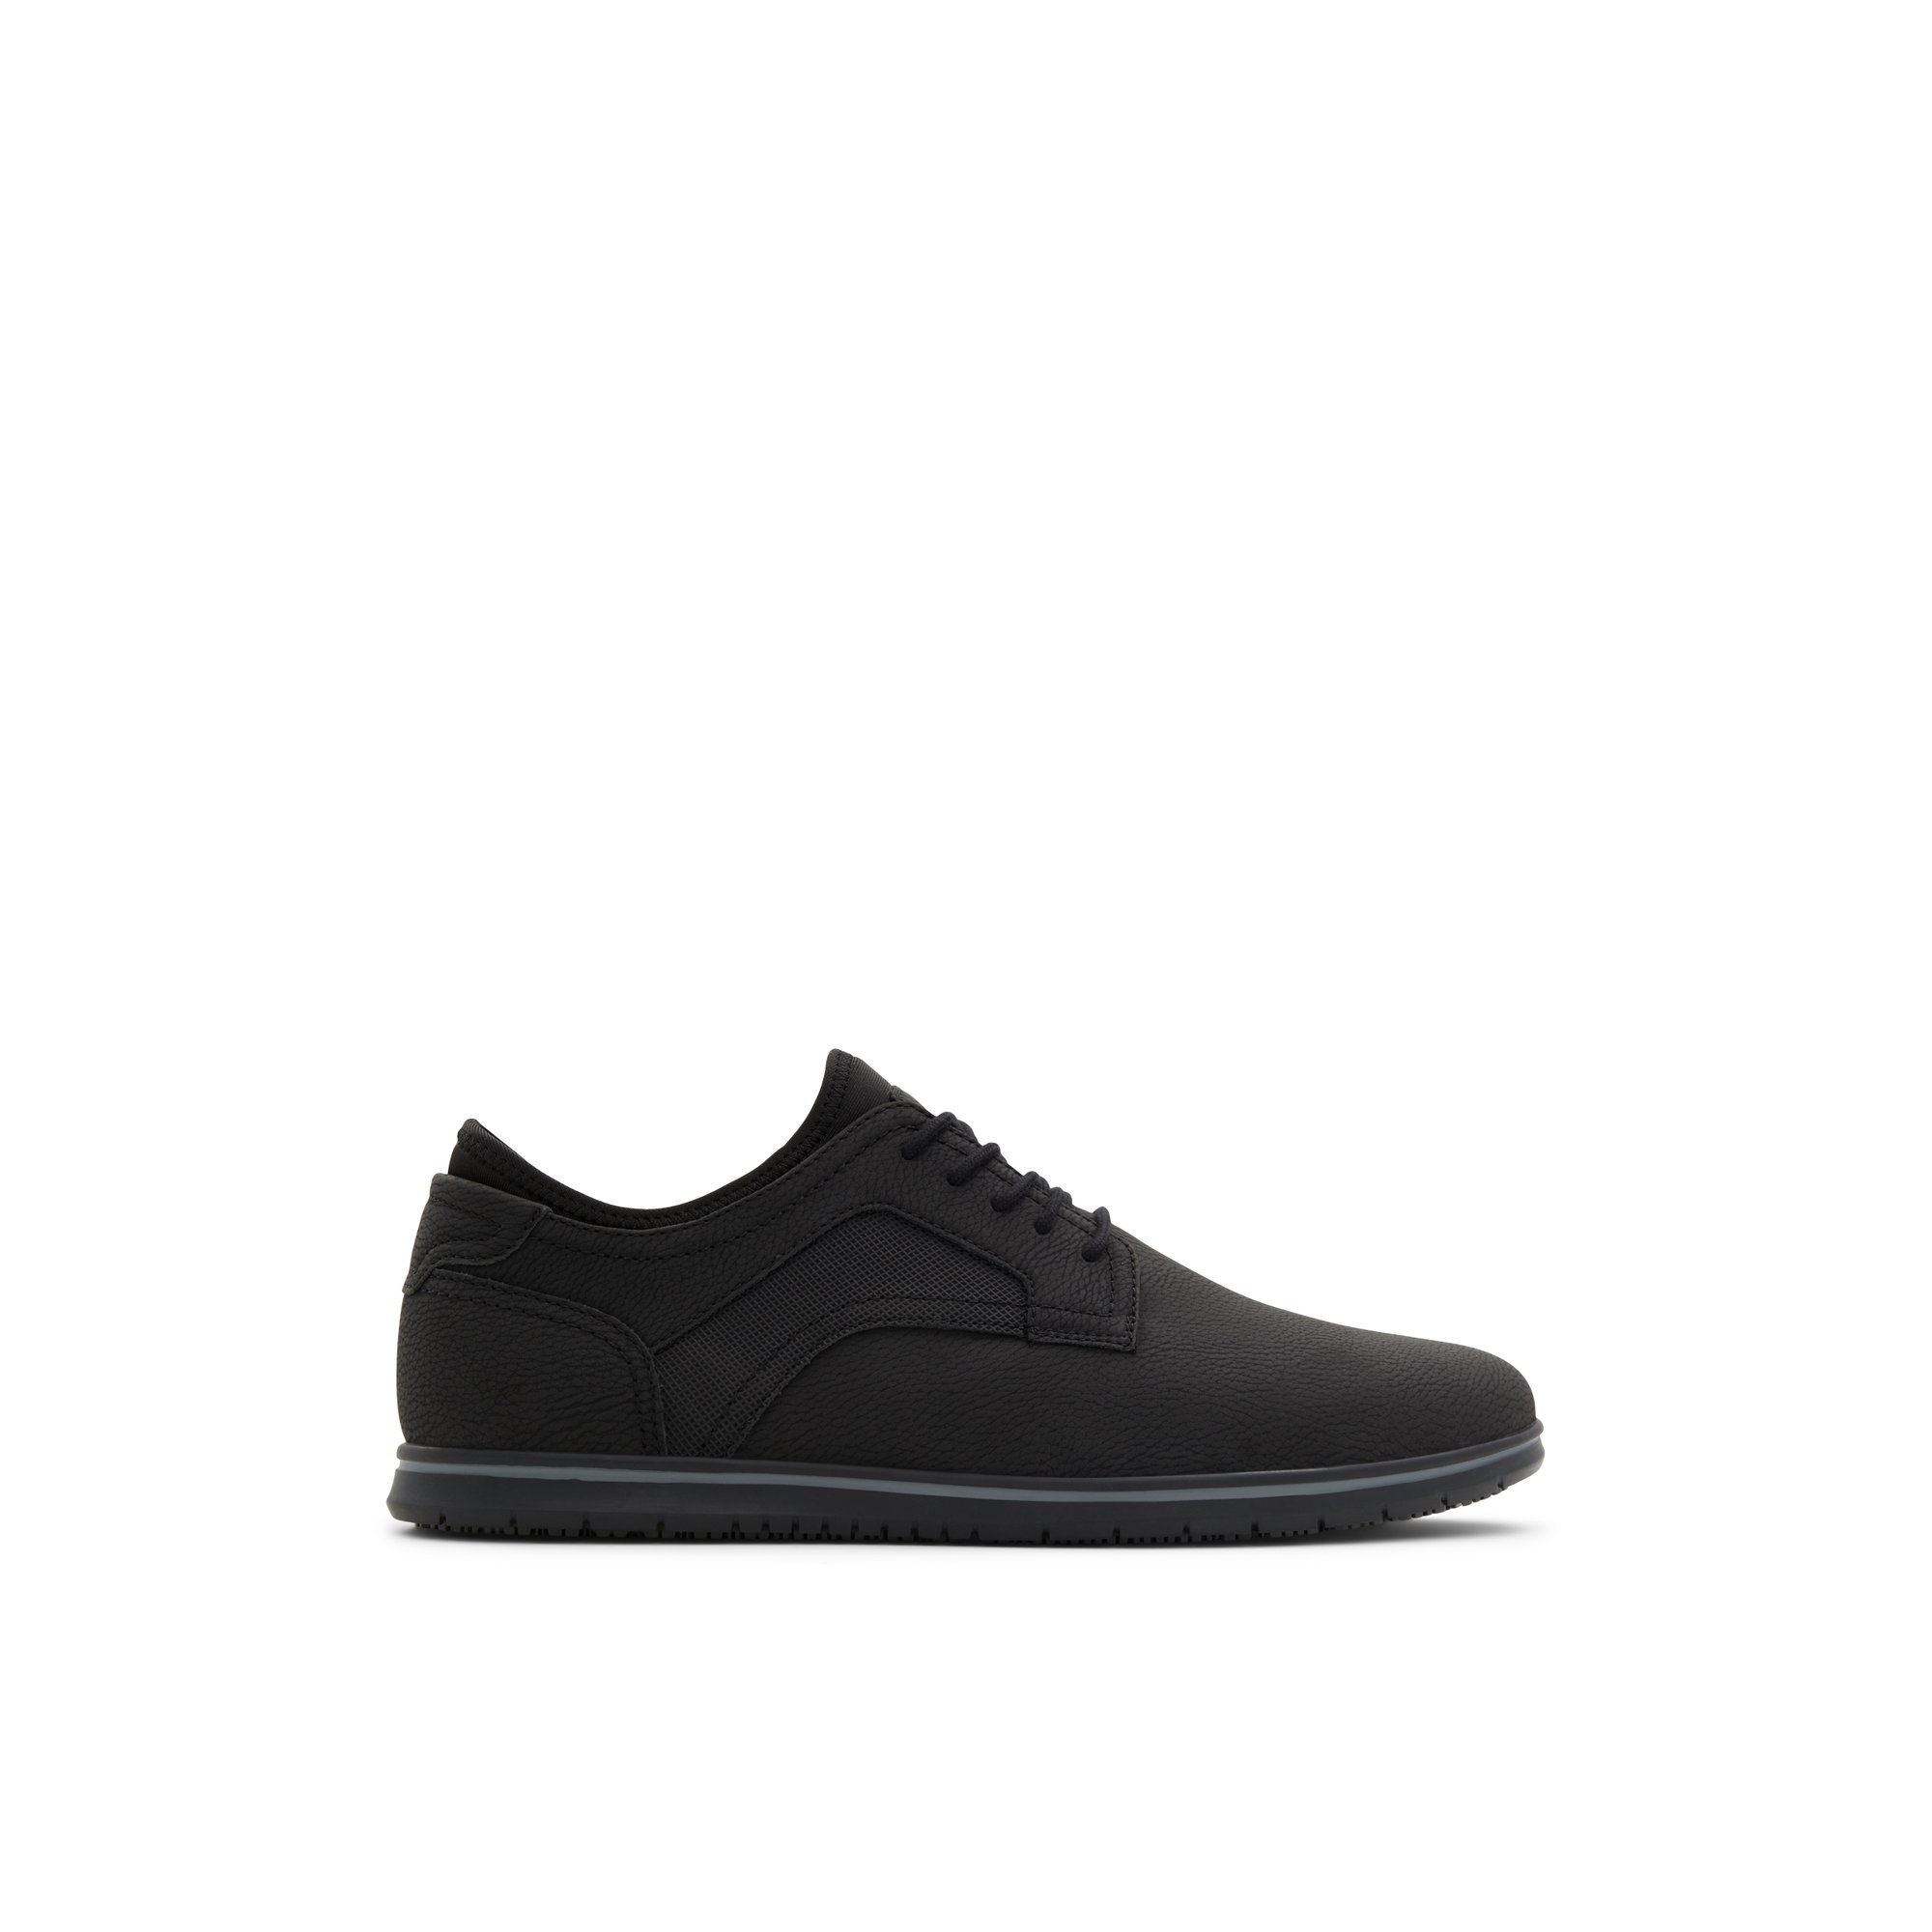 ALDO Drymos - Men's Casual Shoes - Black